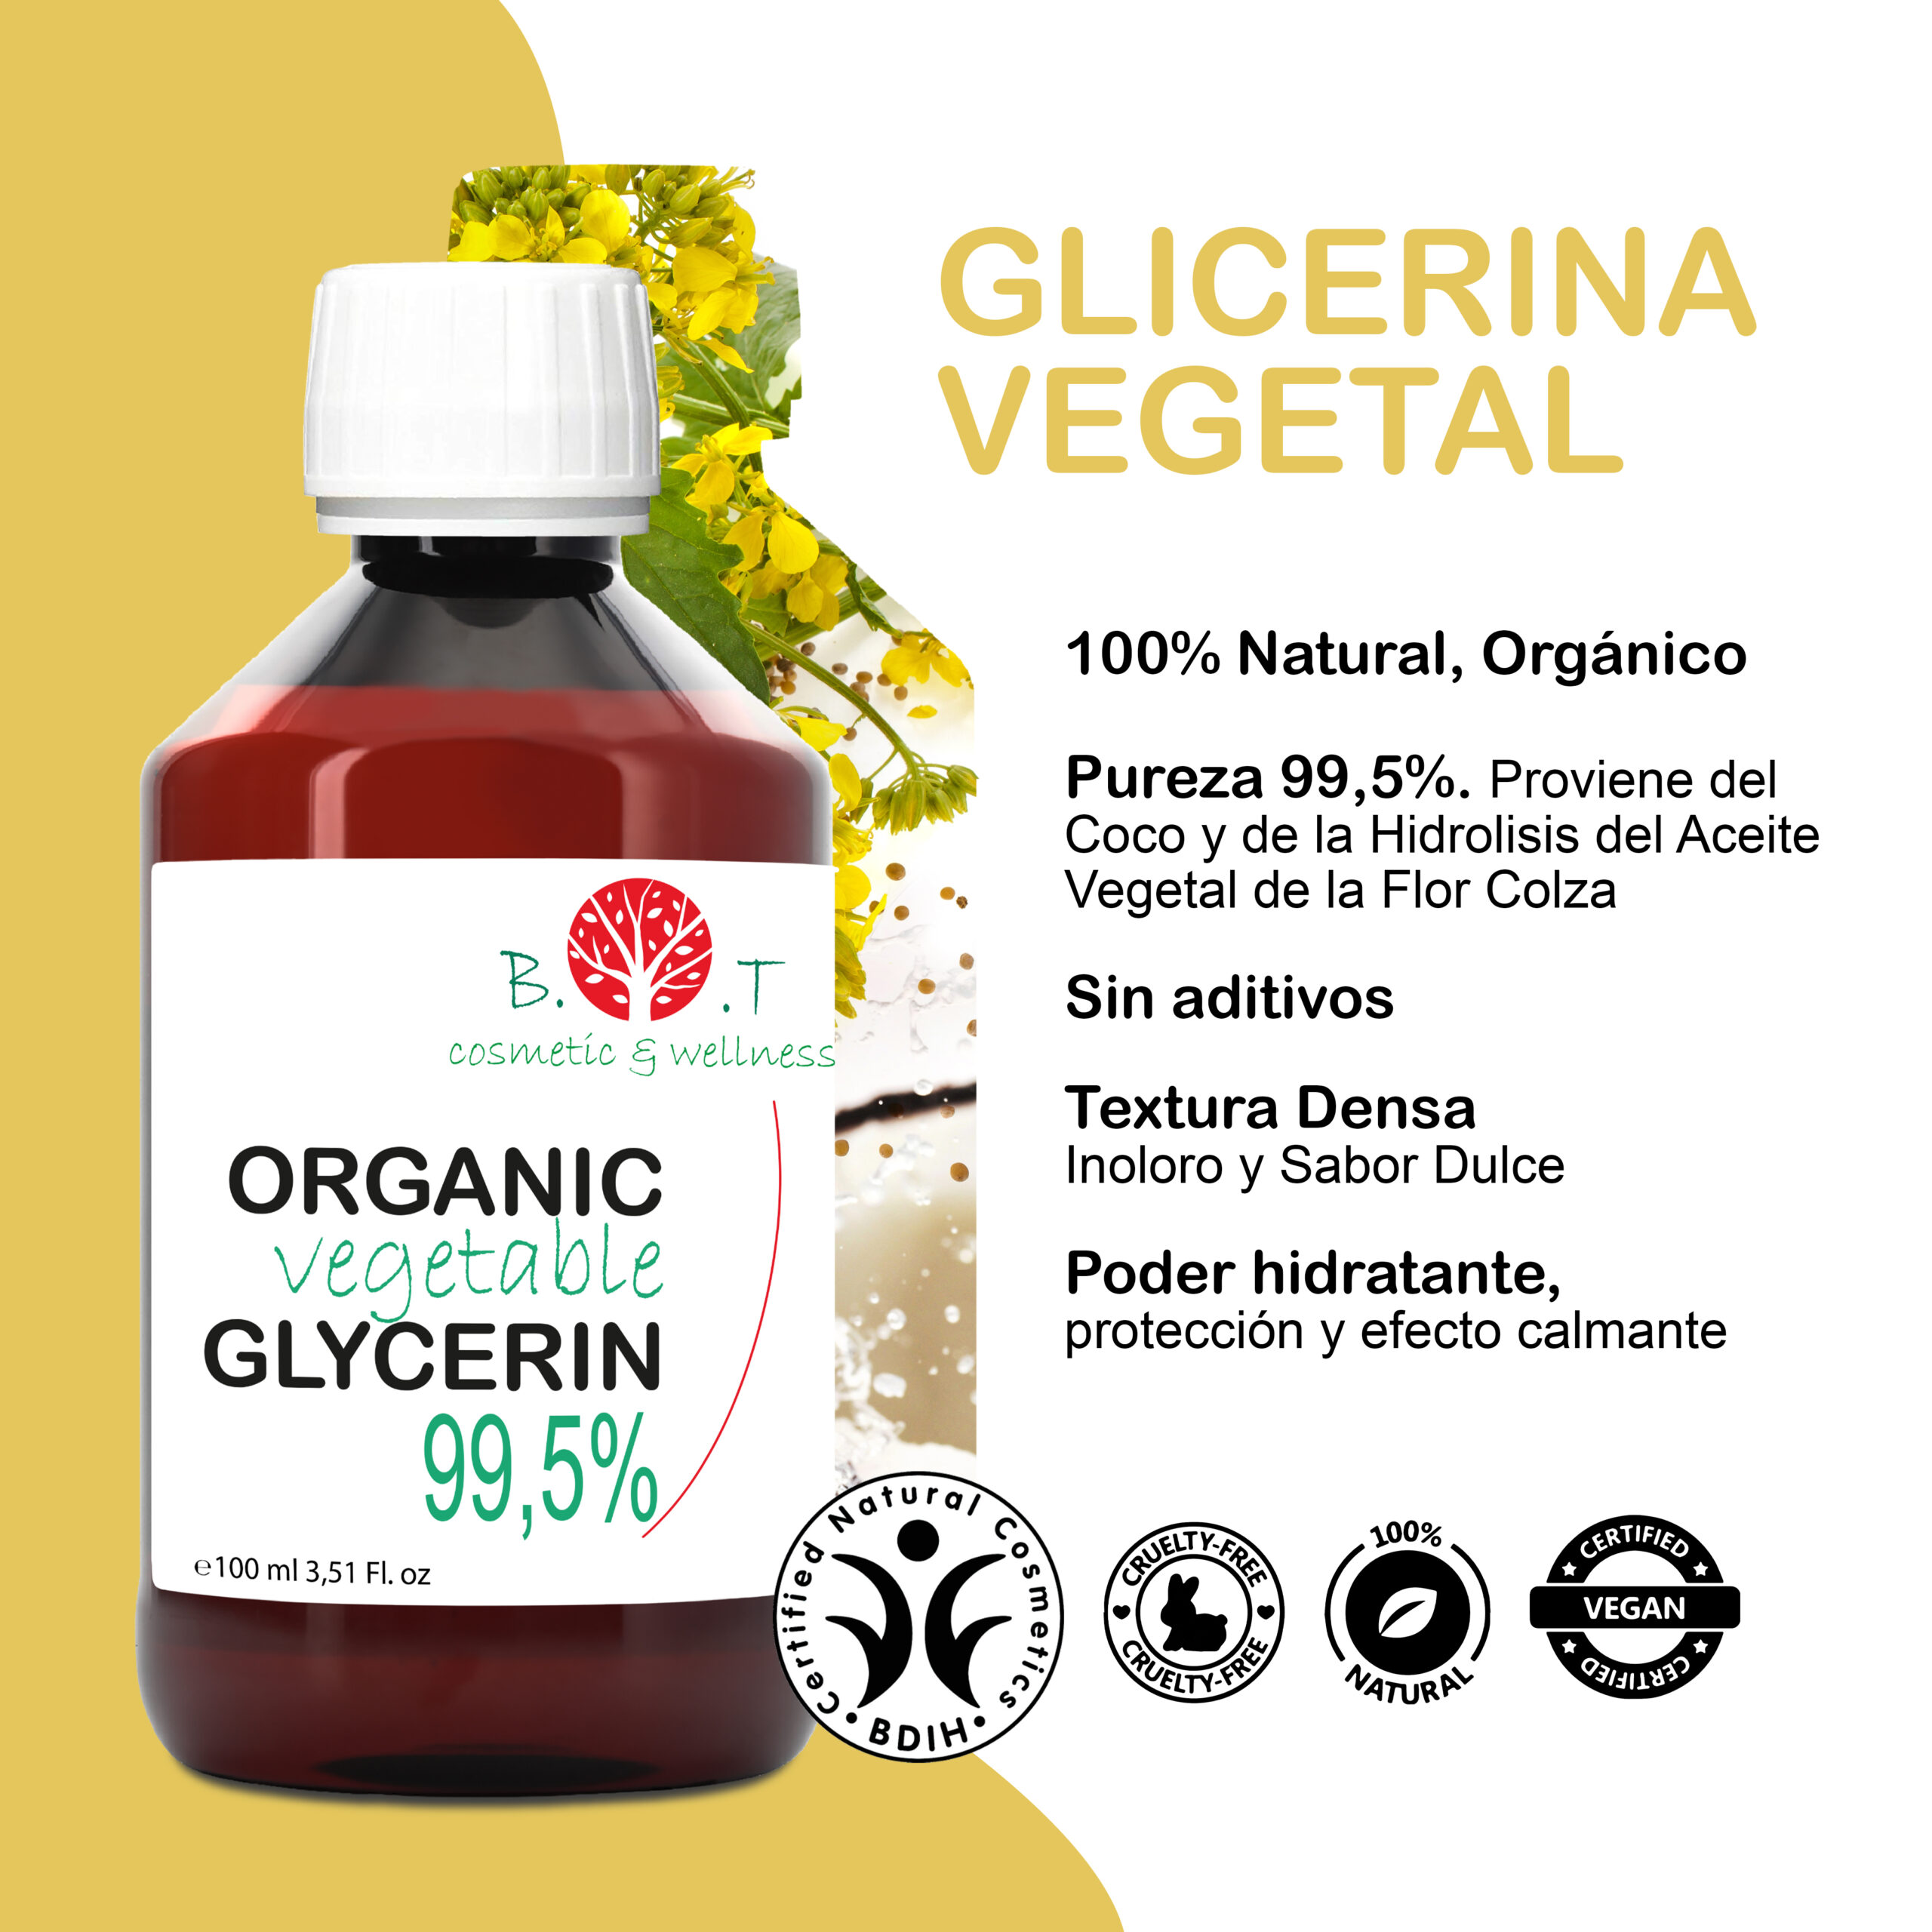 Glicerina vegetal